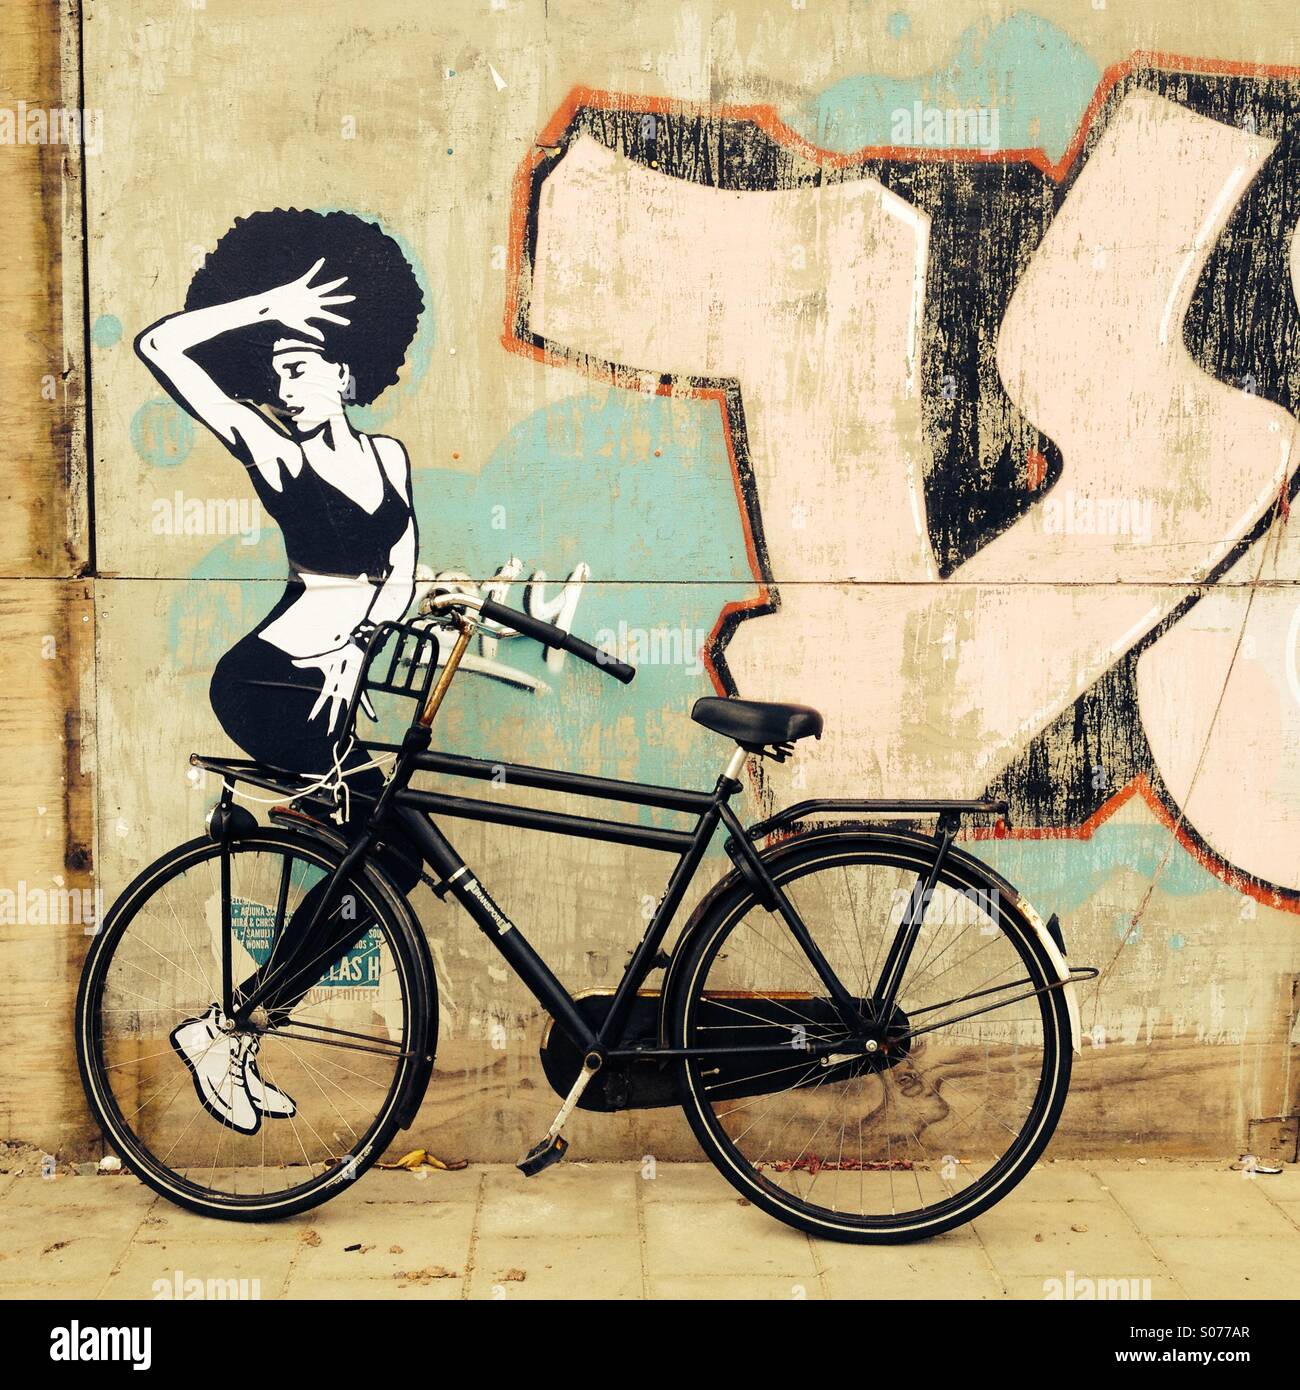 Parked bike and street art Stock Photo - Alamy